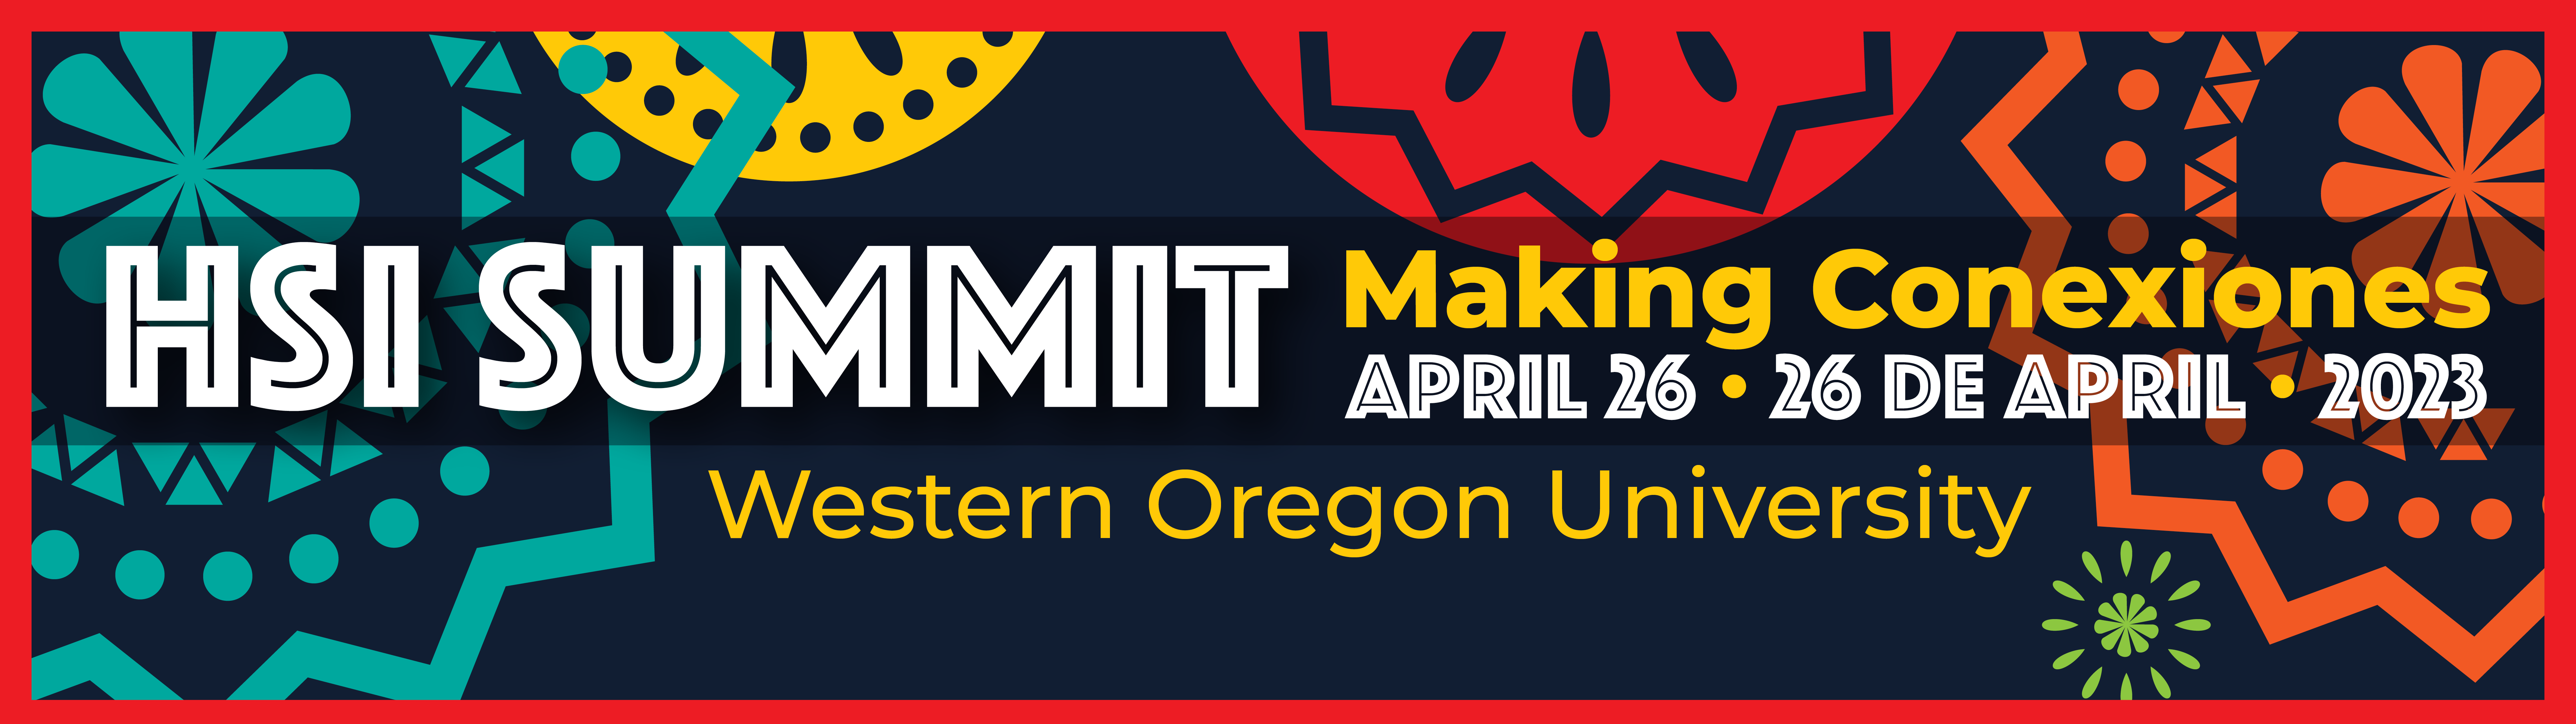 HSI Summit Making Conexiones April 26 2023 Western Oregon University